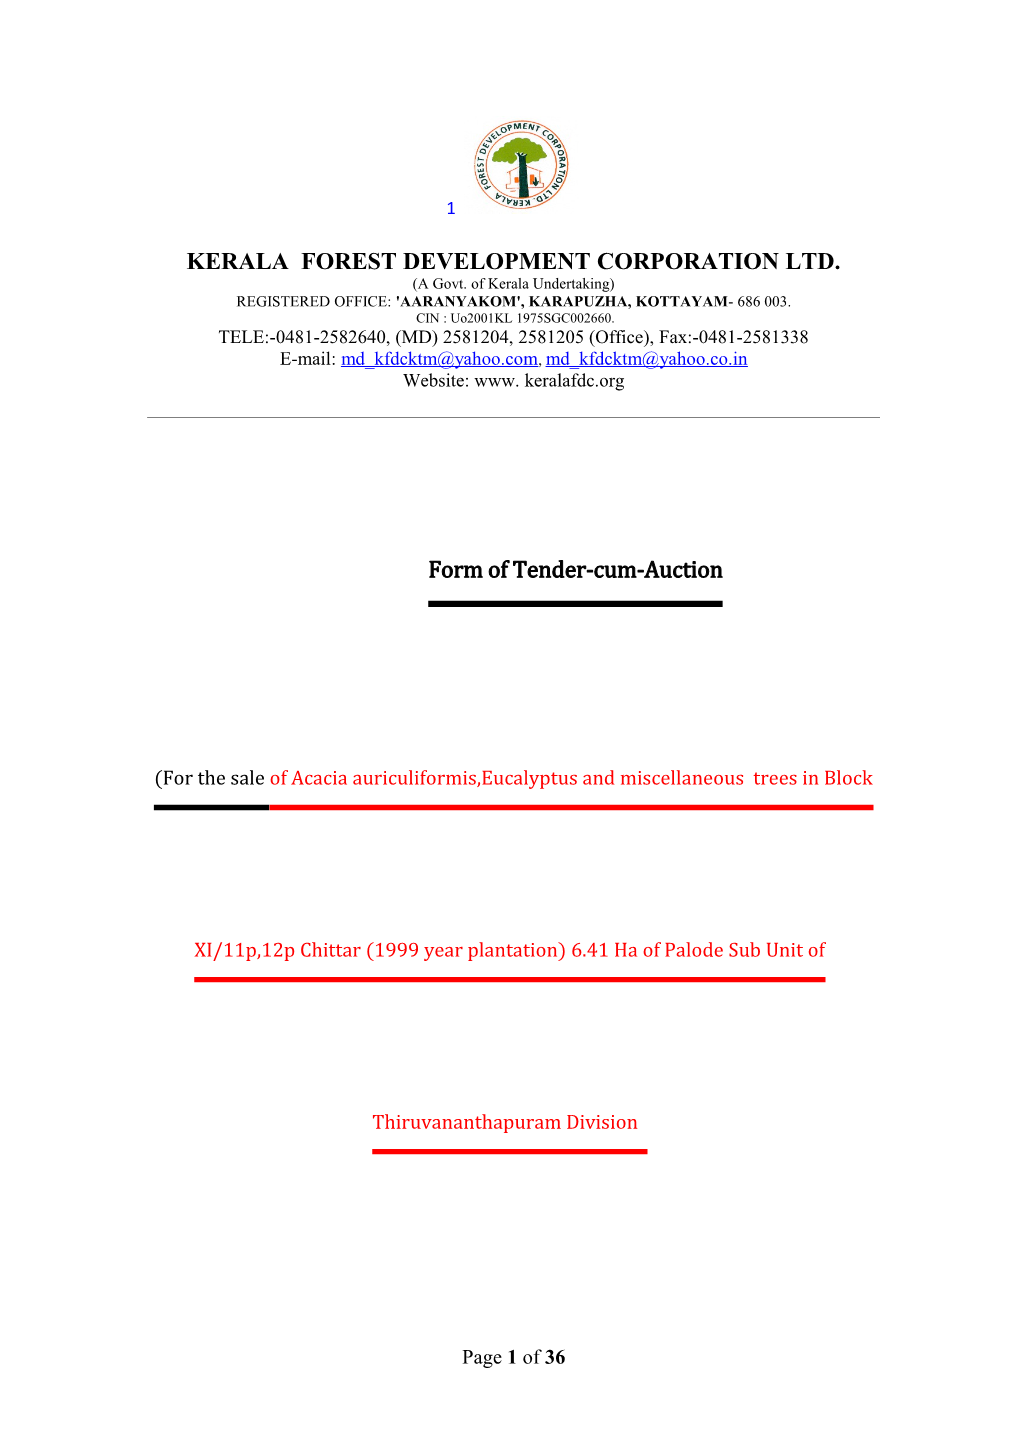 Kerala Forestdevelopment Corporation Ltd